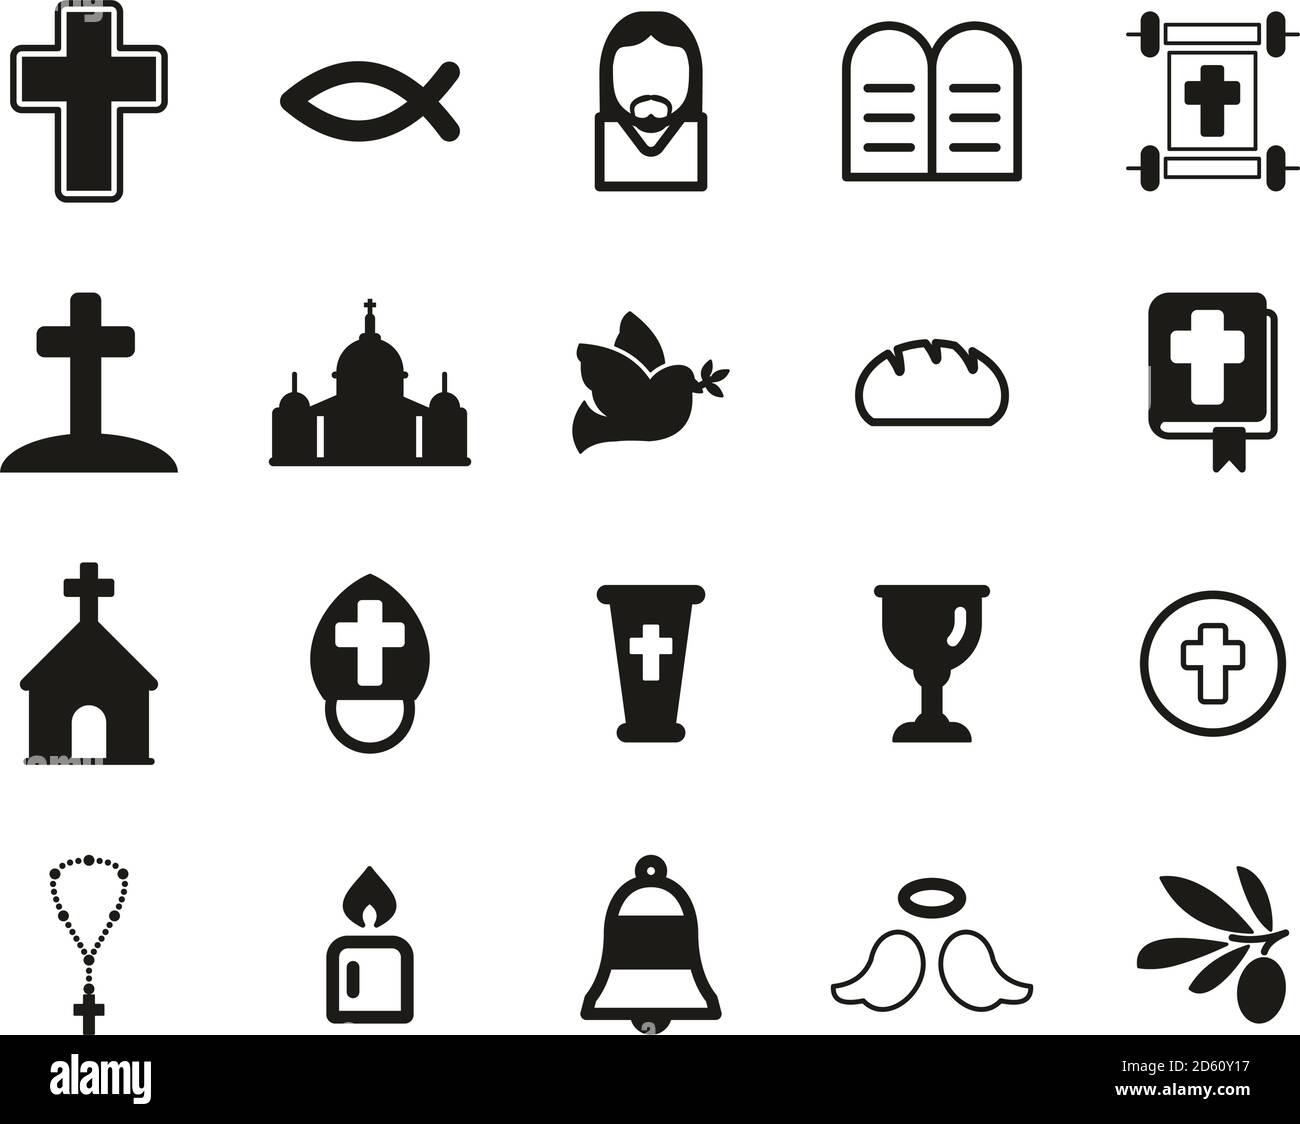 Christianity Religion & Religious Items Icons Black & White Set Big Stock Vector